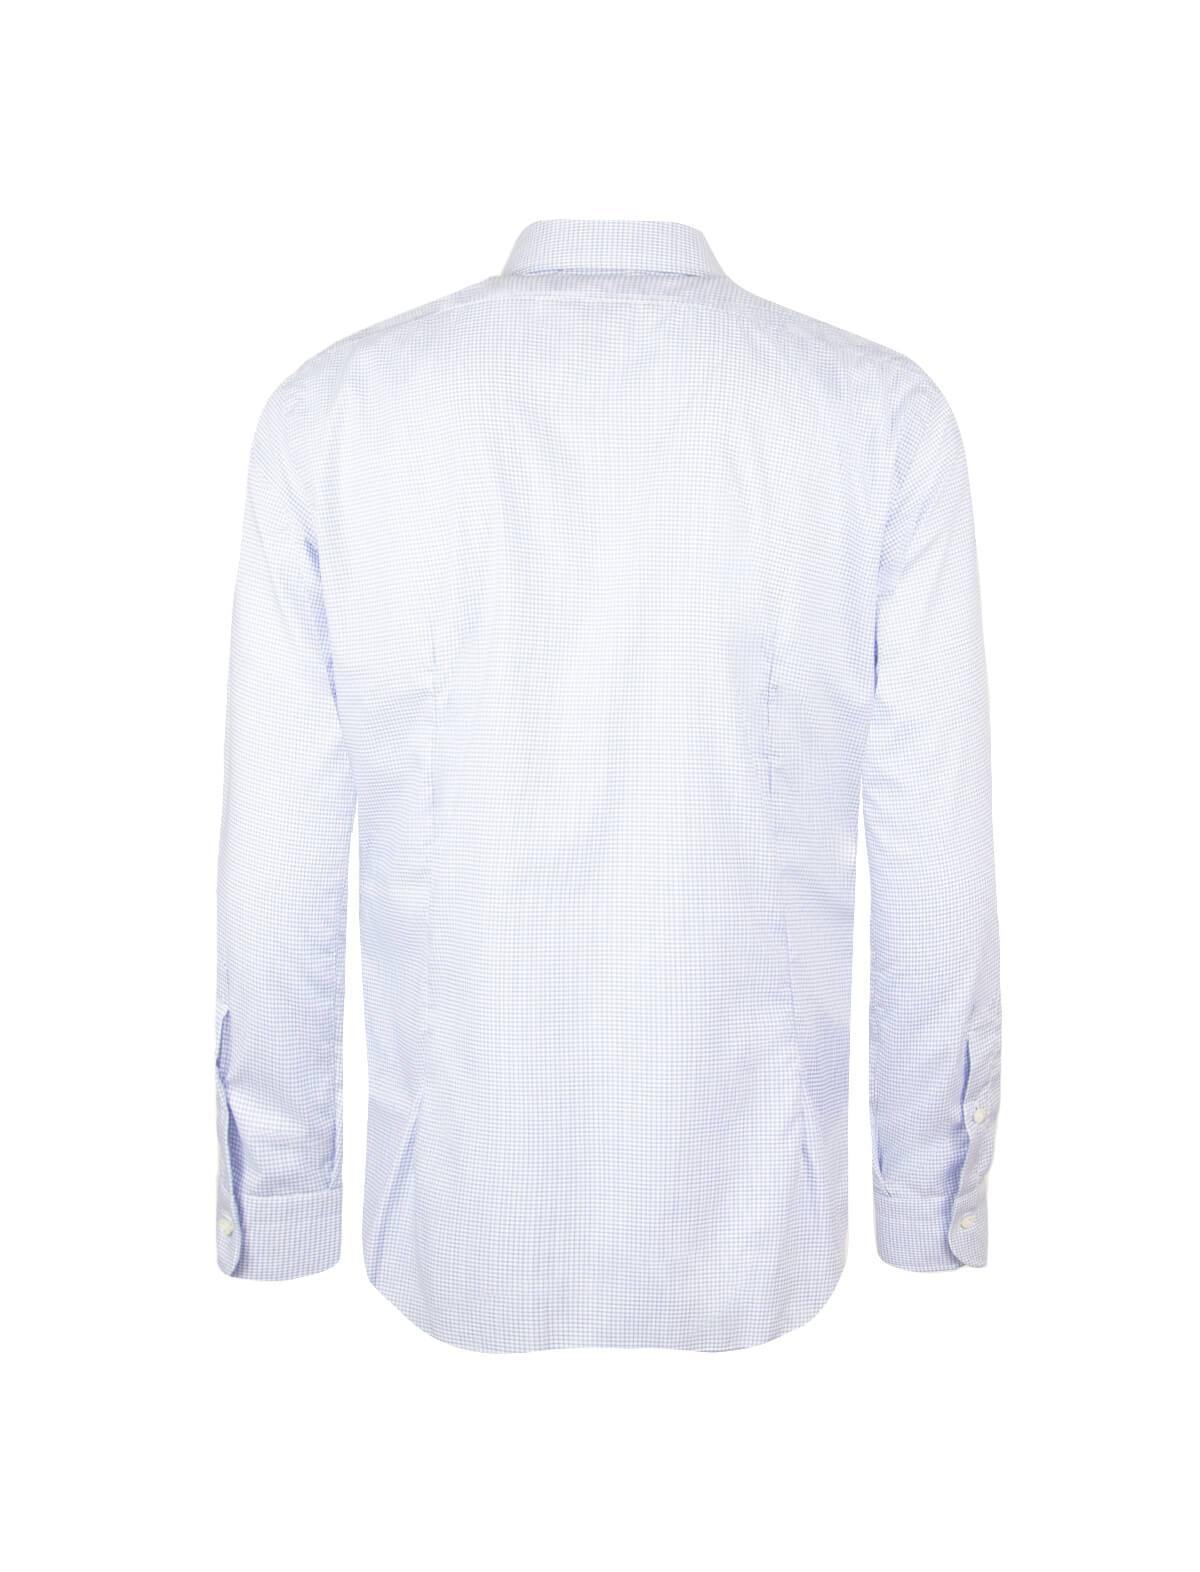 BARBA Journey Wrinkle-Resistant Shirt in White/Light Blue Checks | CLOSET Singapore